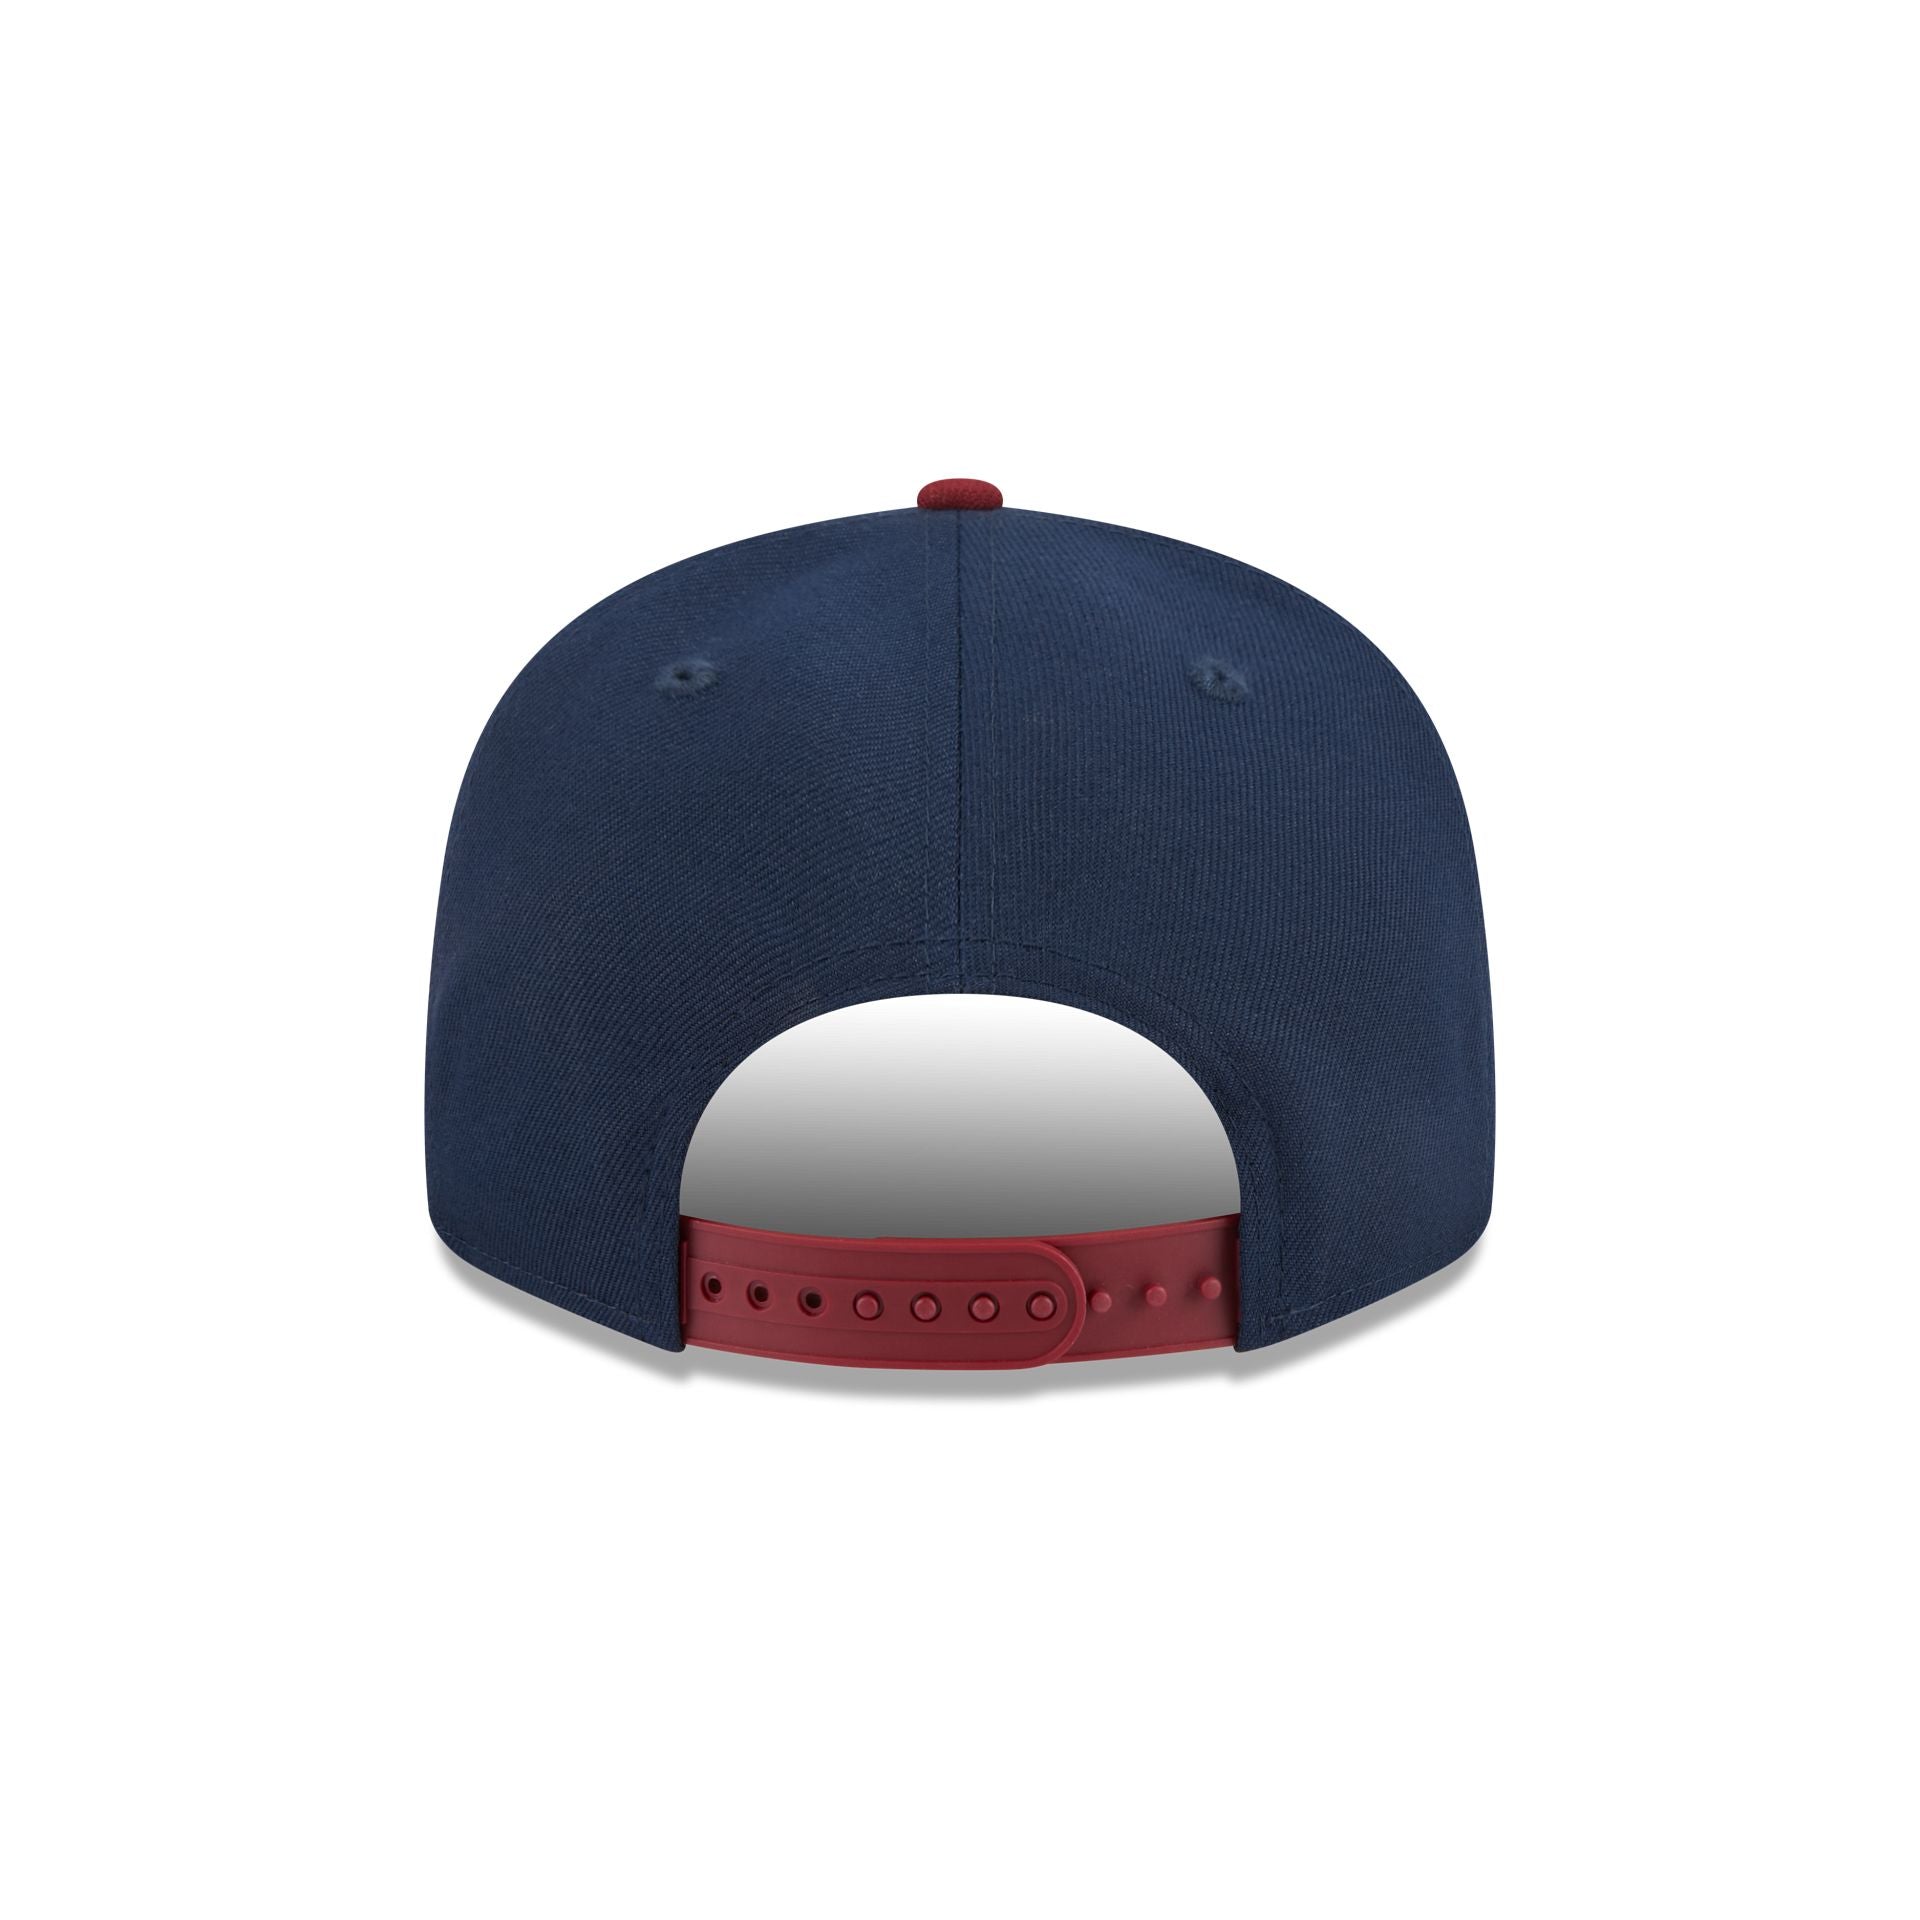 New Era hat navy blue color